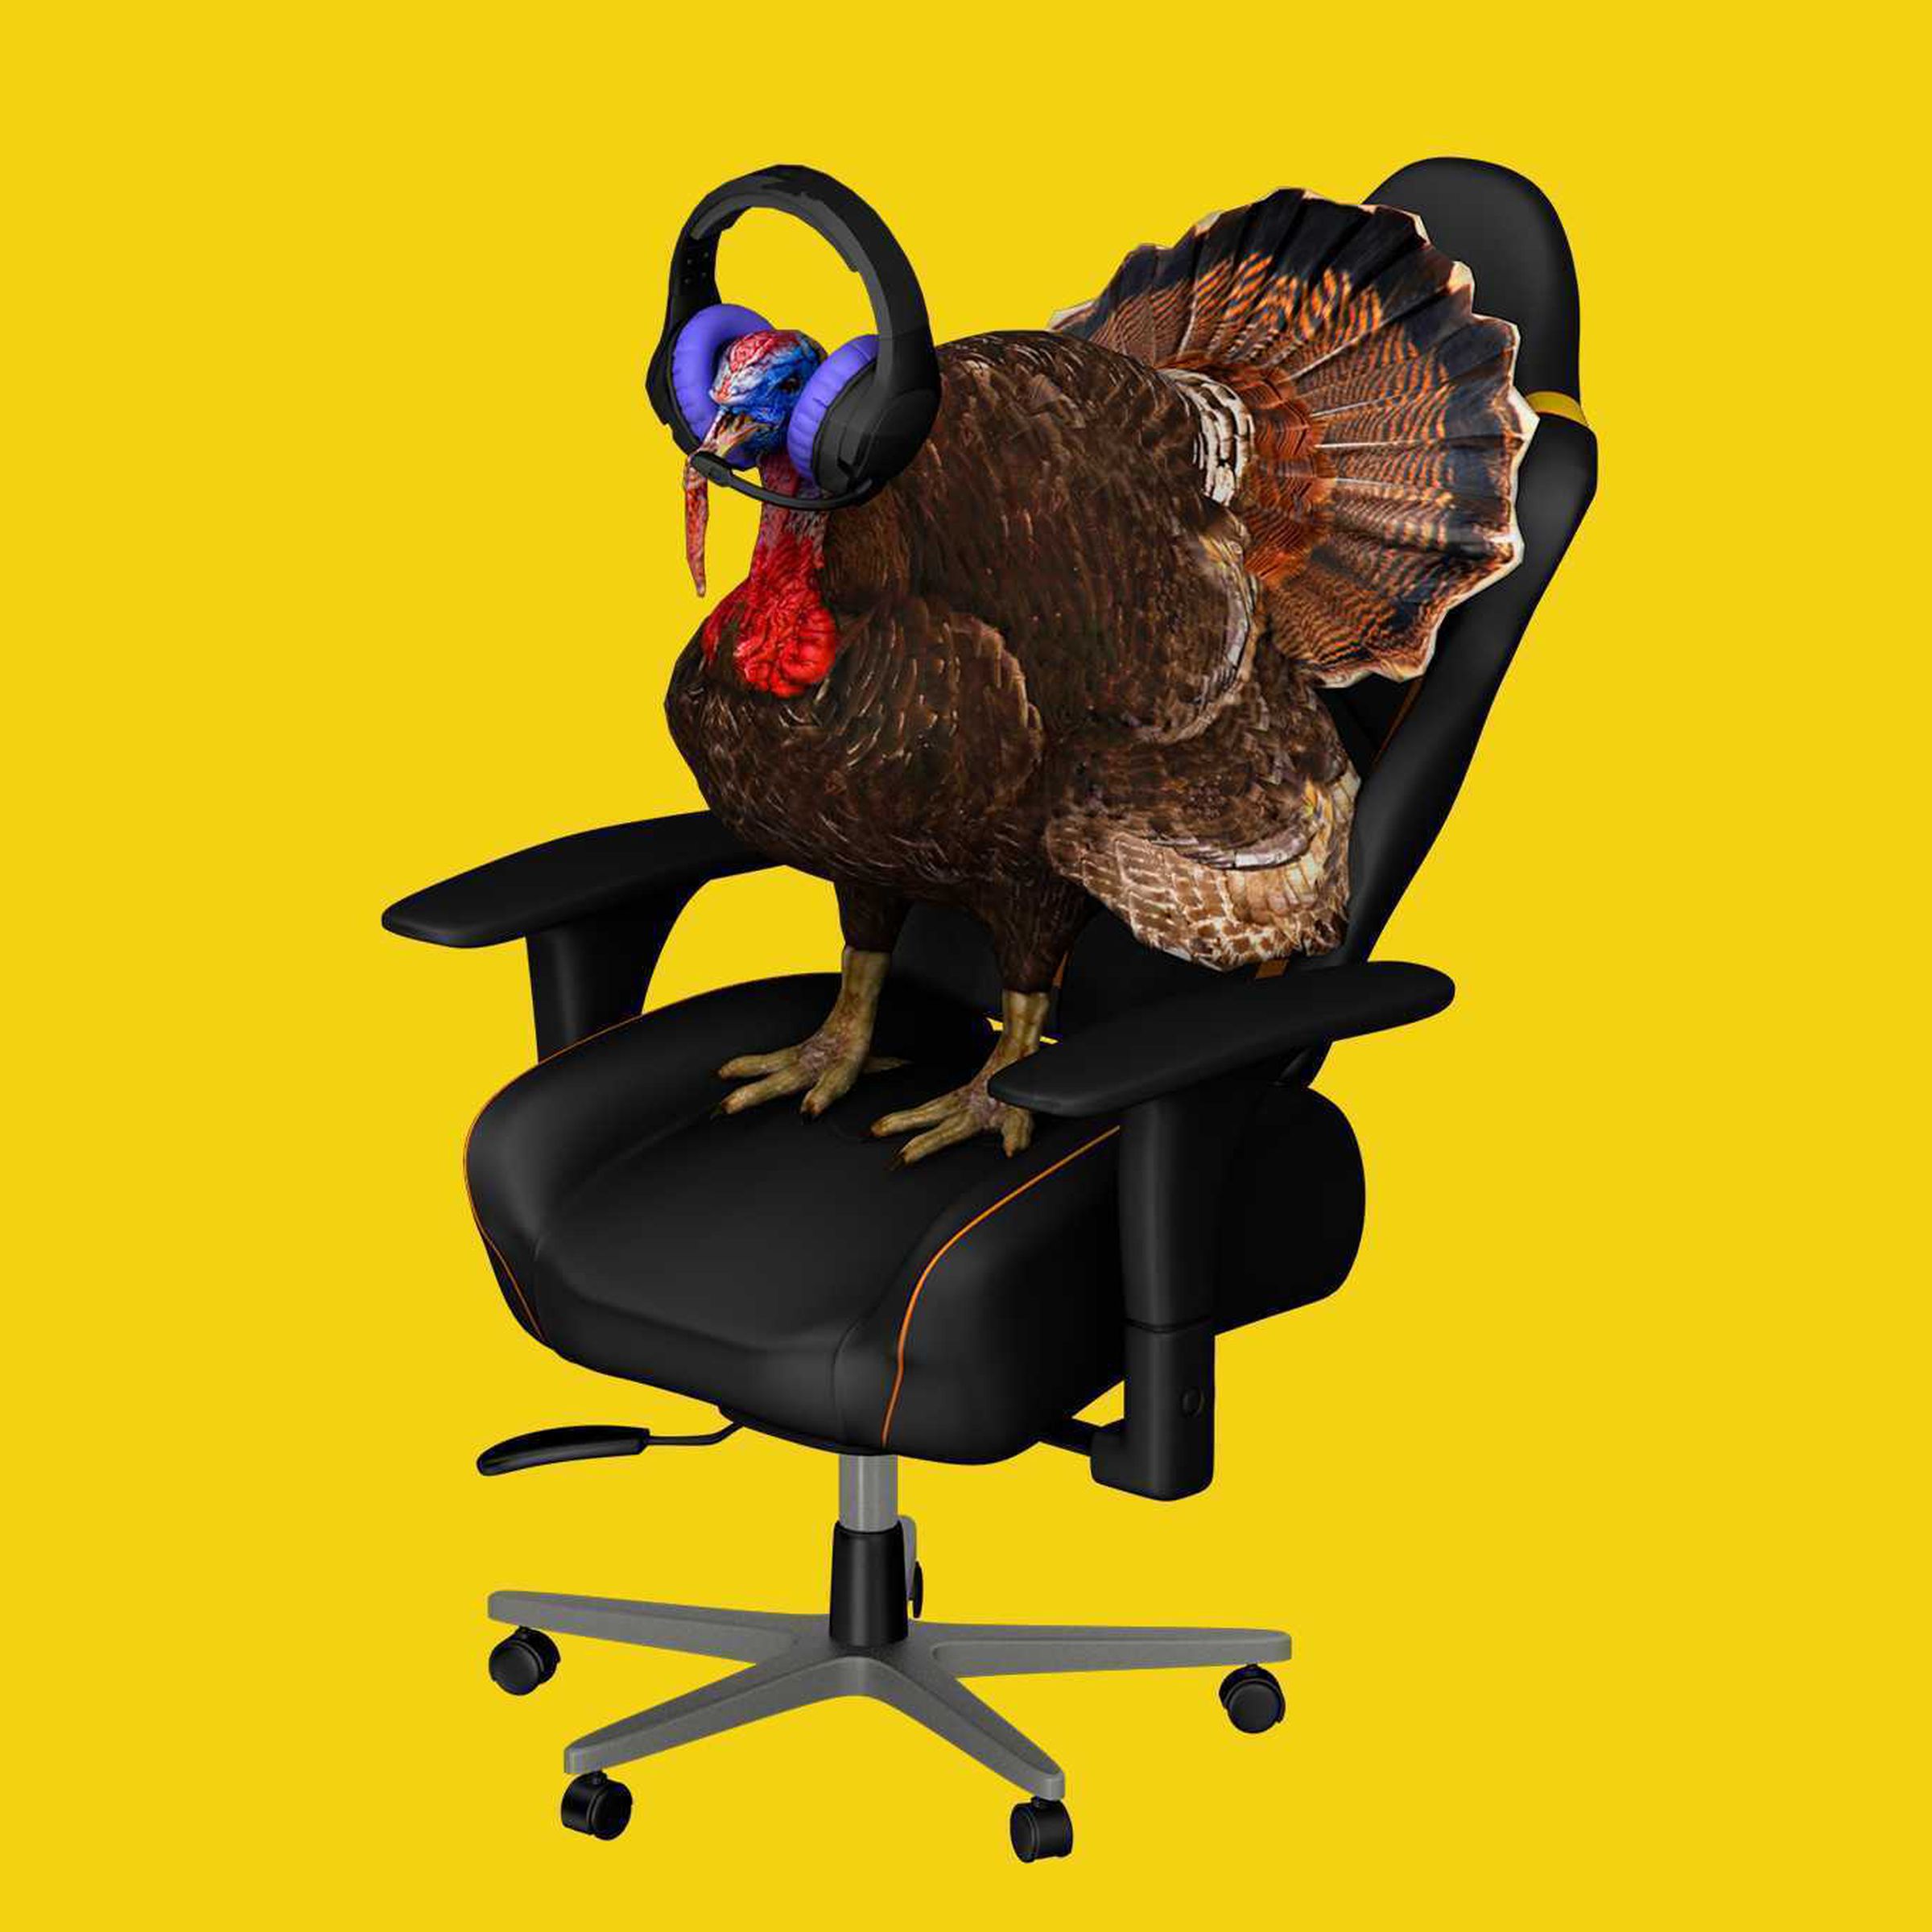 An illustration of a gamer turkey wearing big headphones.